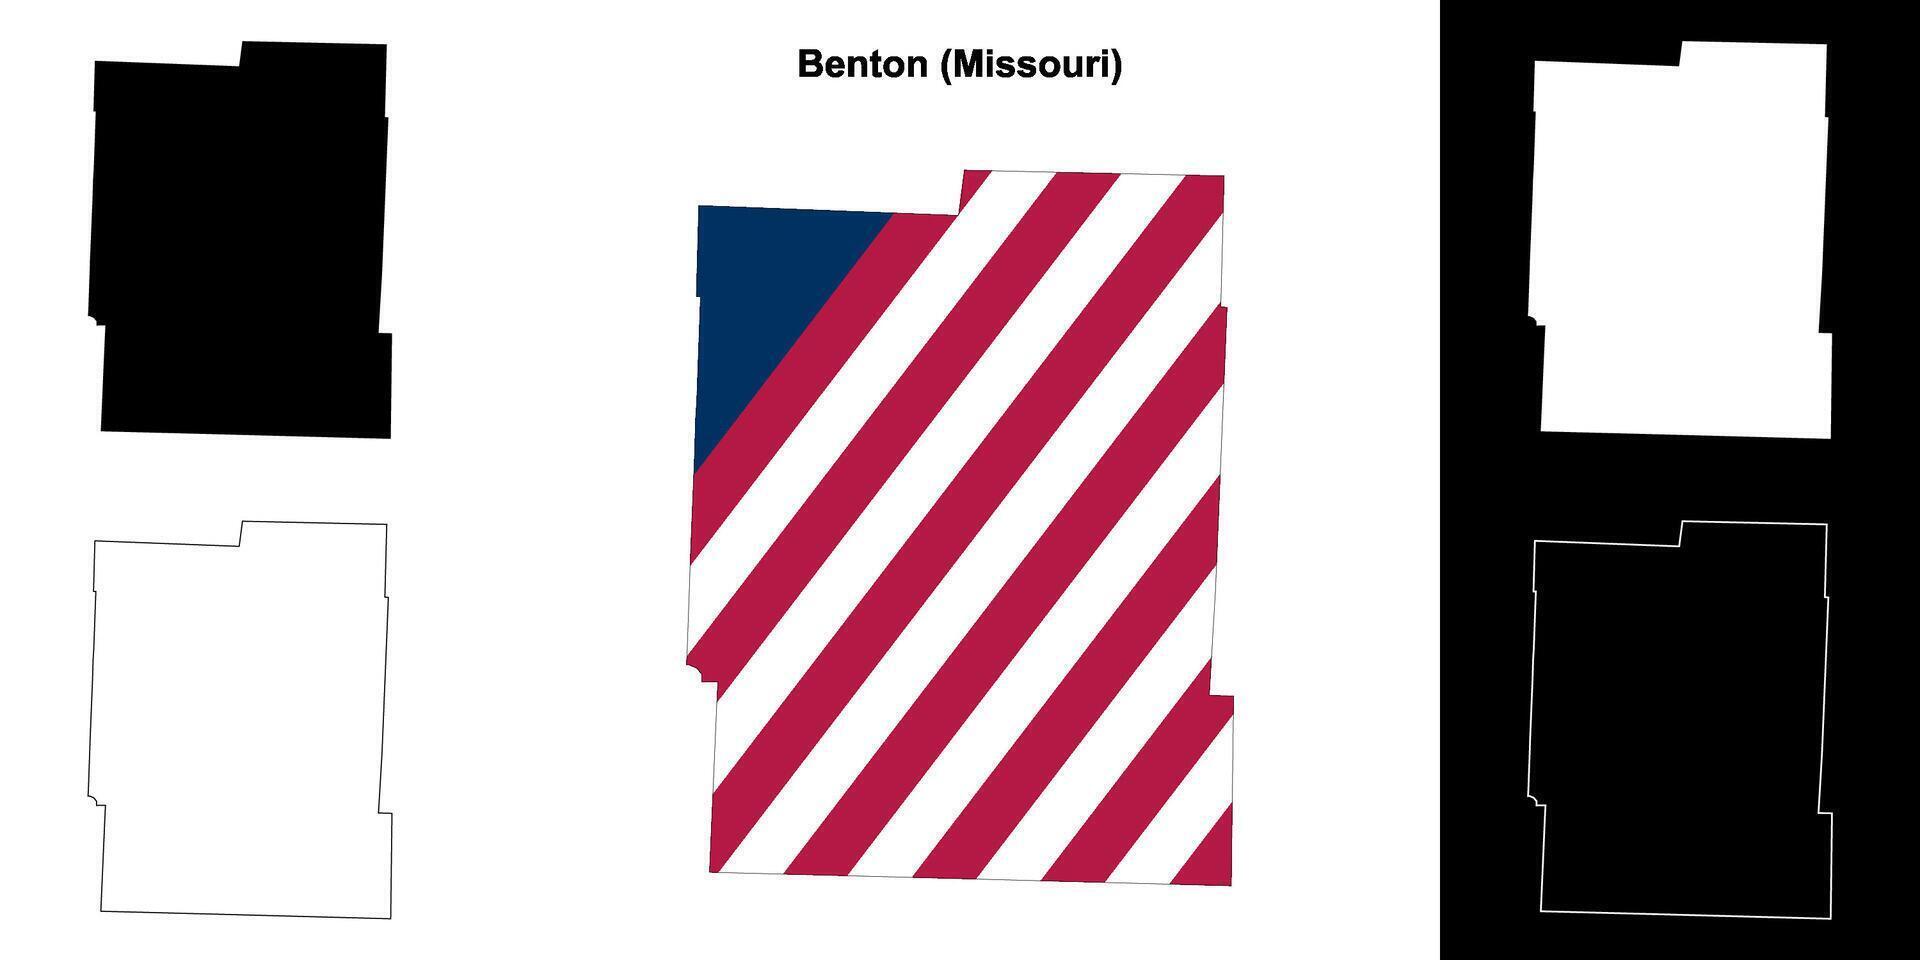 benton contea, Missouri schema carta geografica impostato vettore